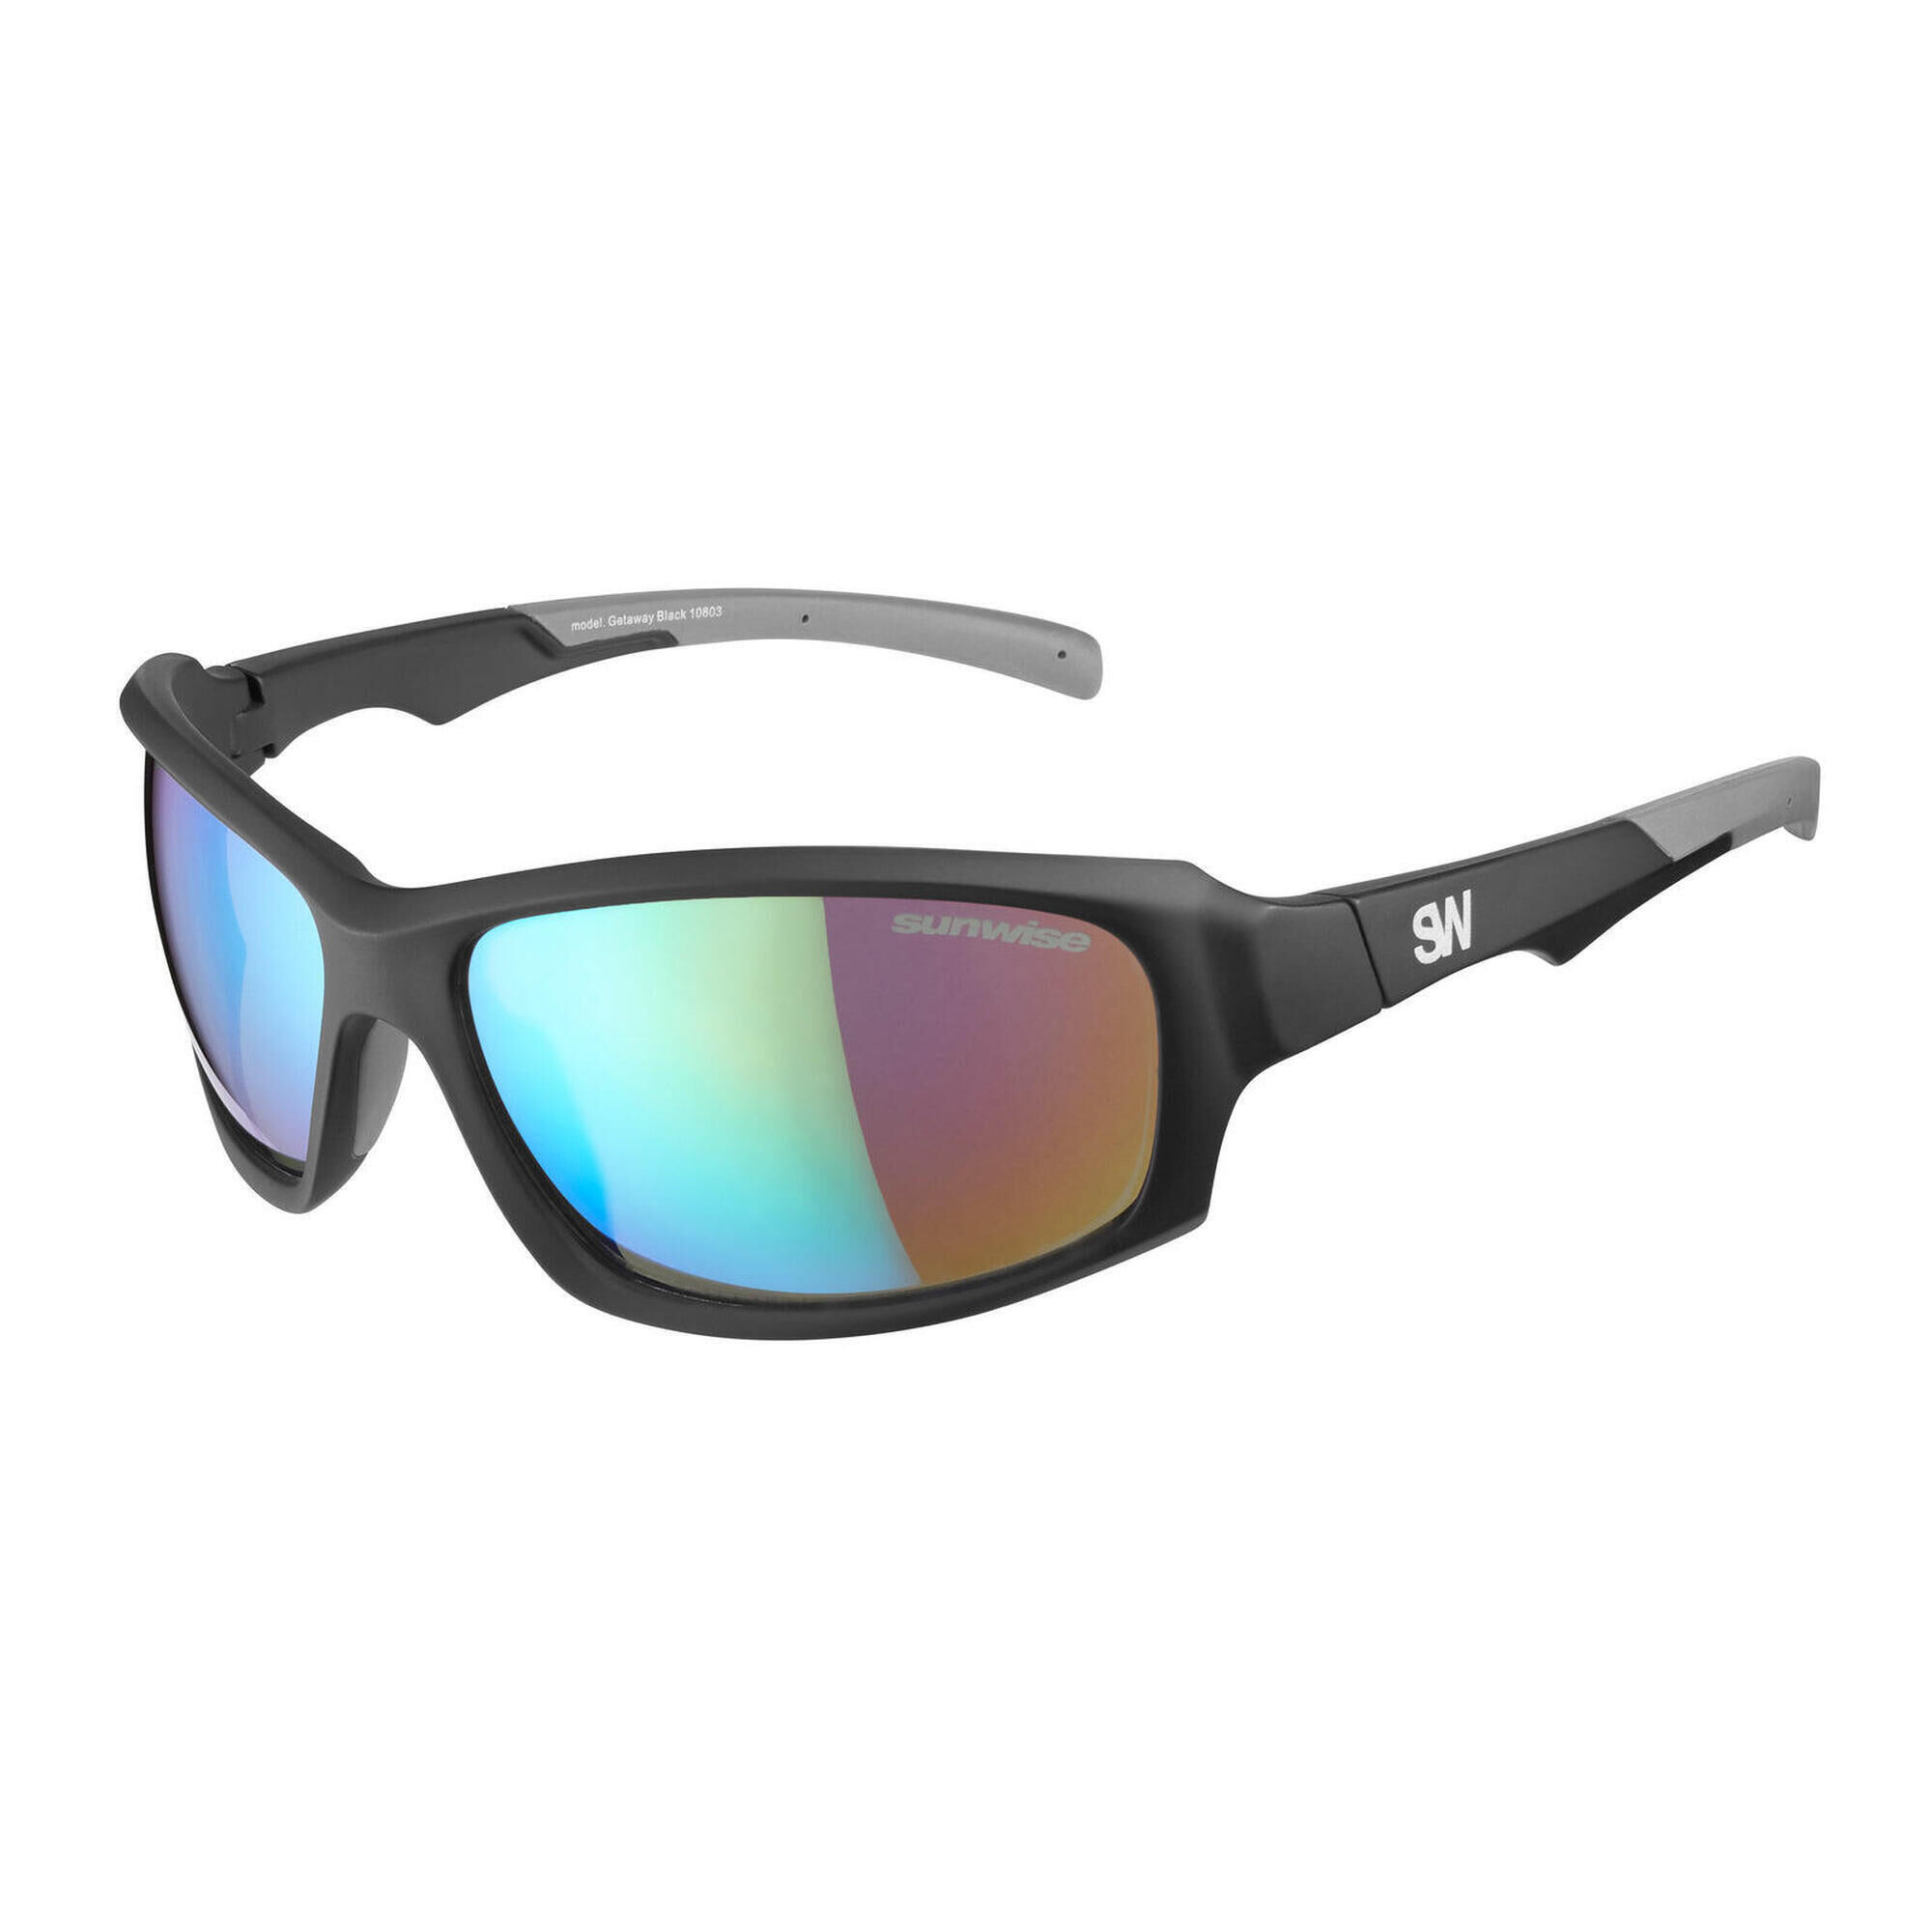 SUNWISE Getaway Sports Sunglasses - Category 3